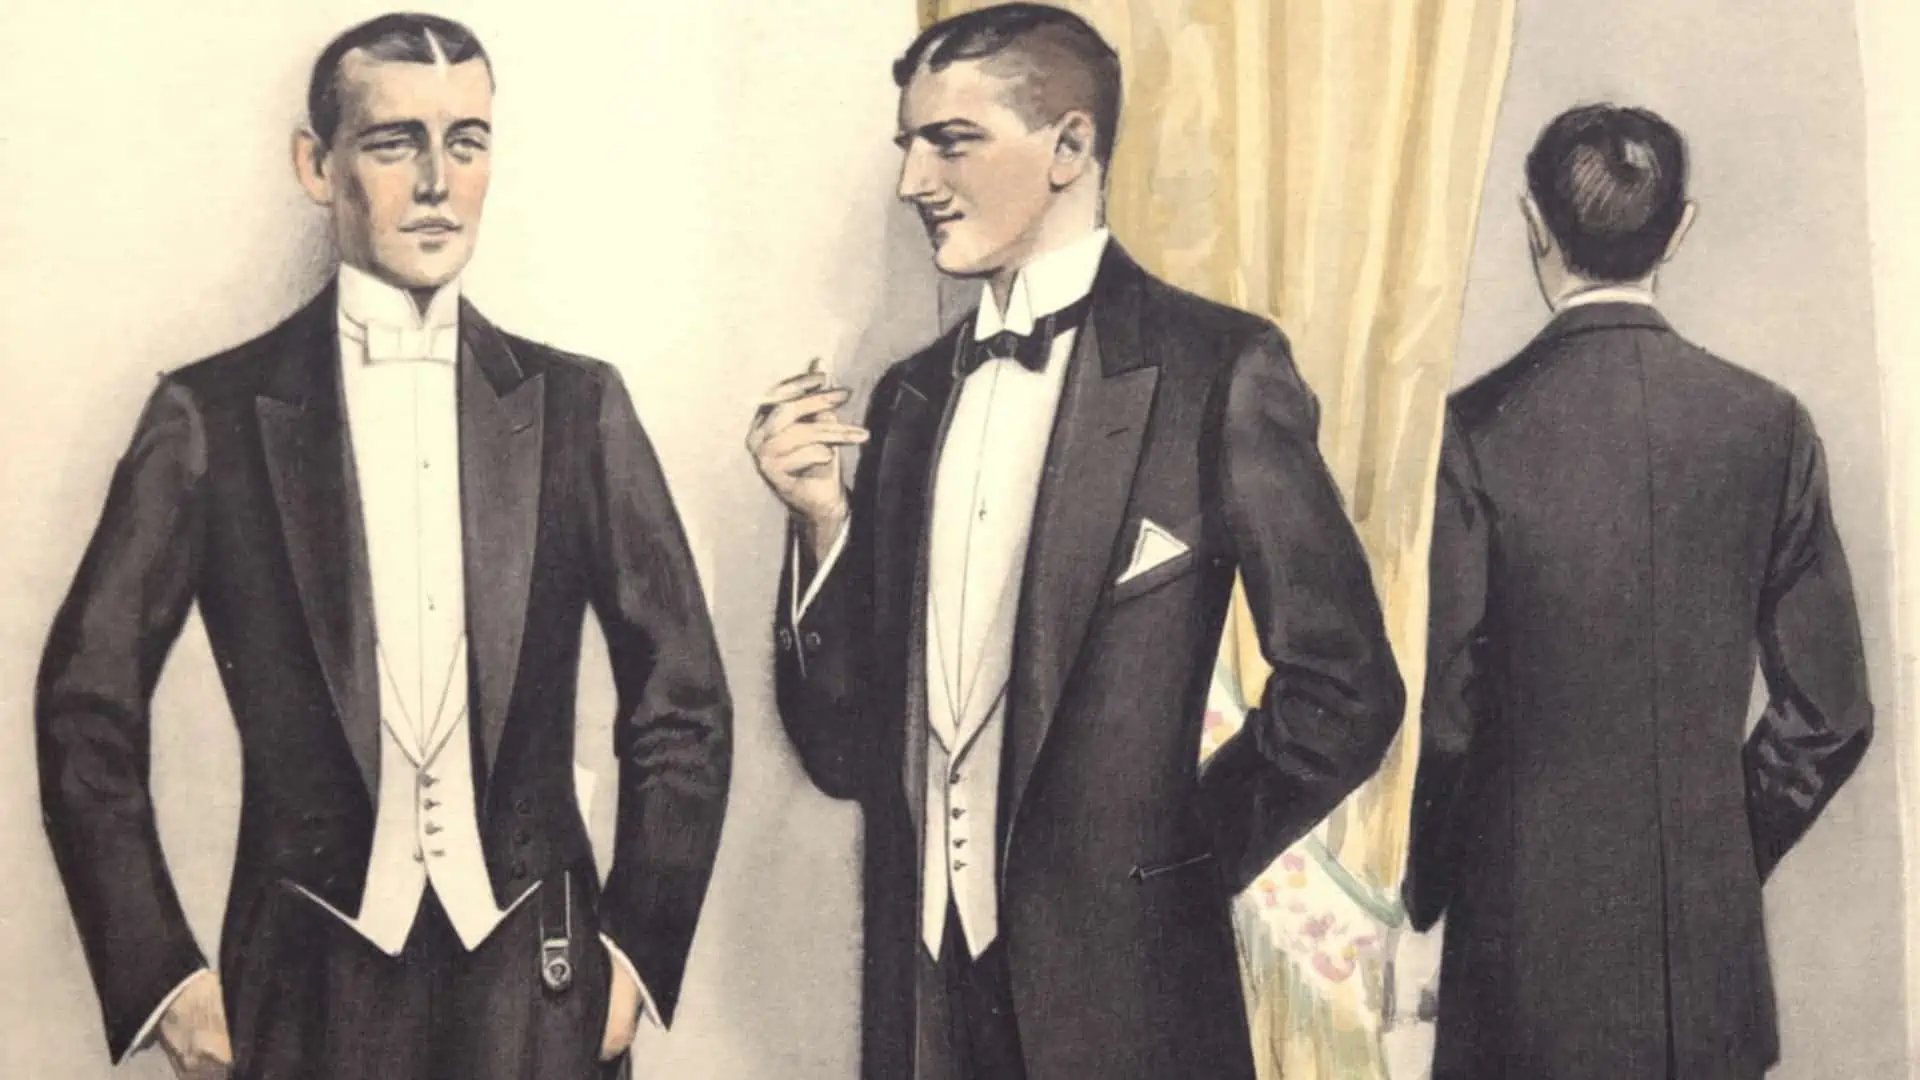 Vintage Evening Waistcoat and Cummerbunds Featured Image